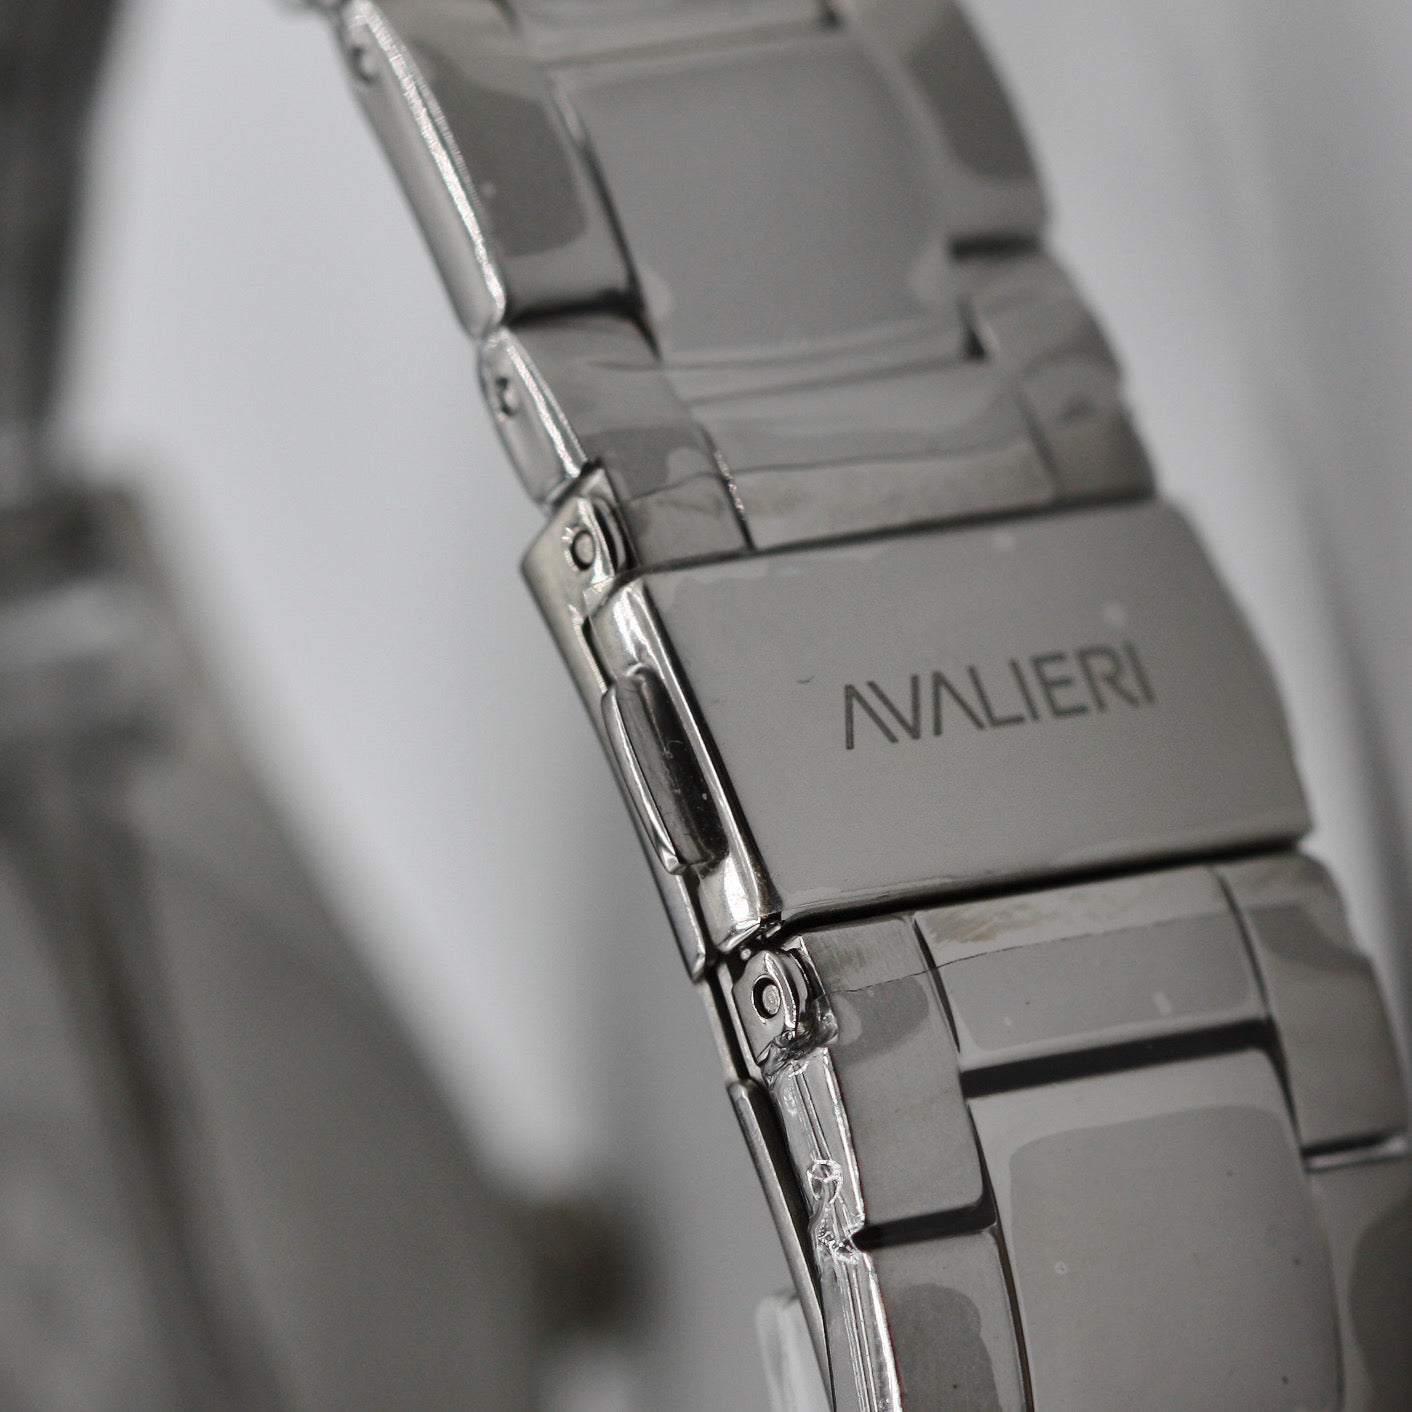 Avalieri Women's Quartz Black Dial Watch - AV-2585B